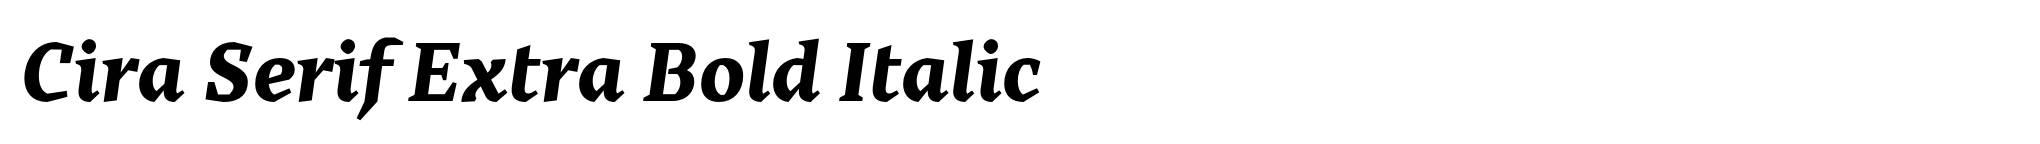 Cira Serif Extra Bold Italic image